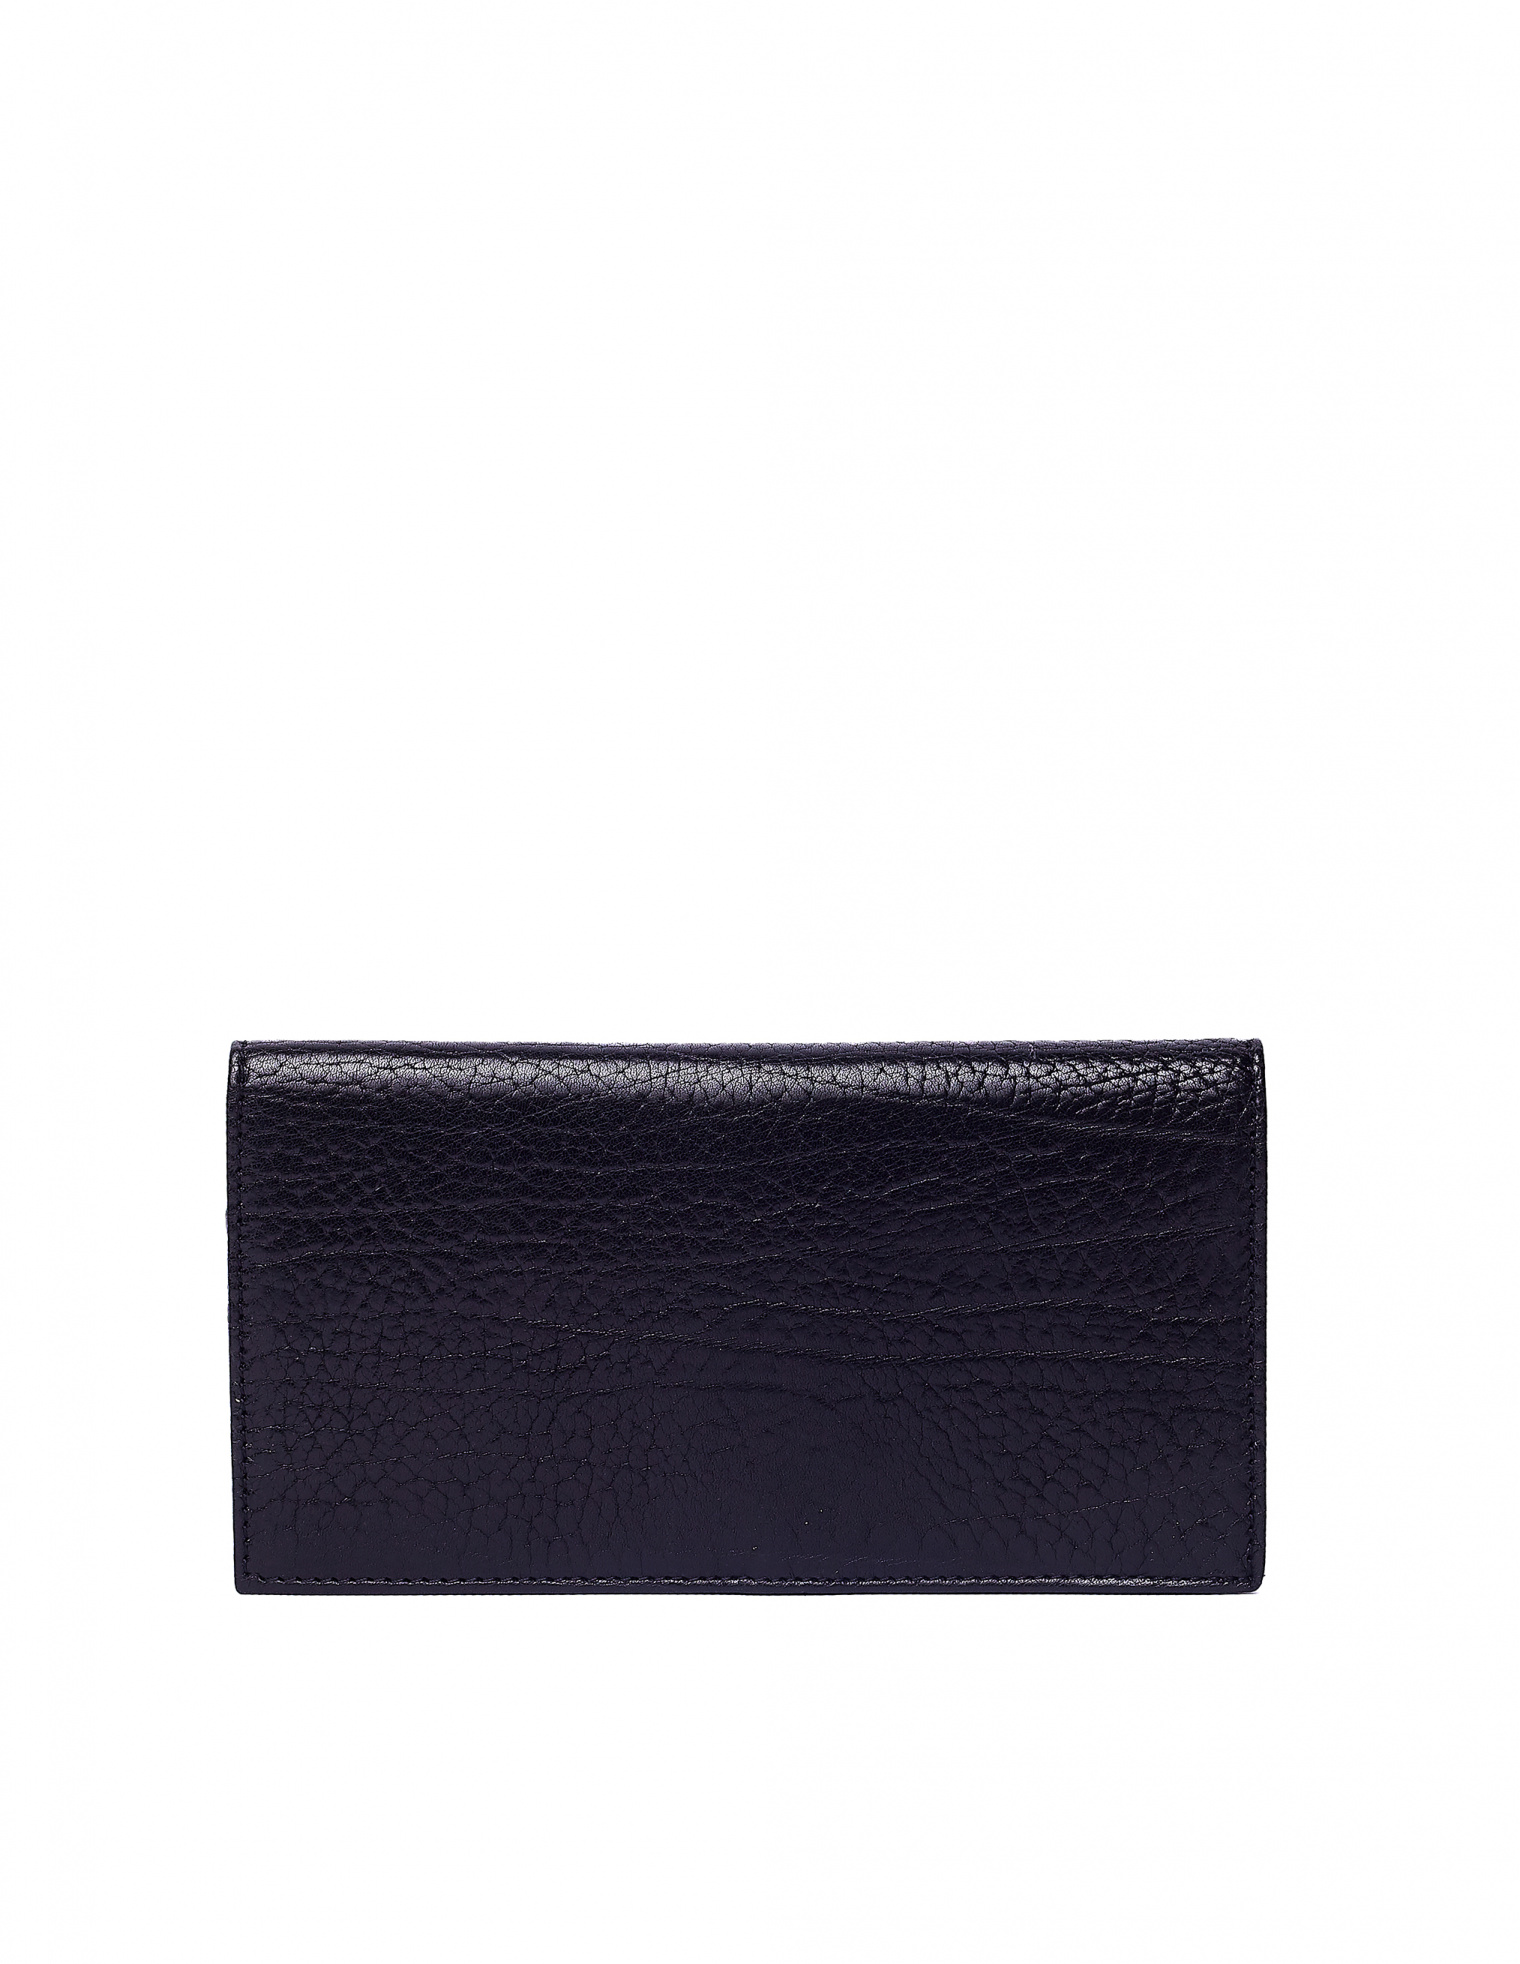 Ugo Cacciatori Black Grained Leather Long Pocket Wallet